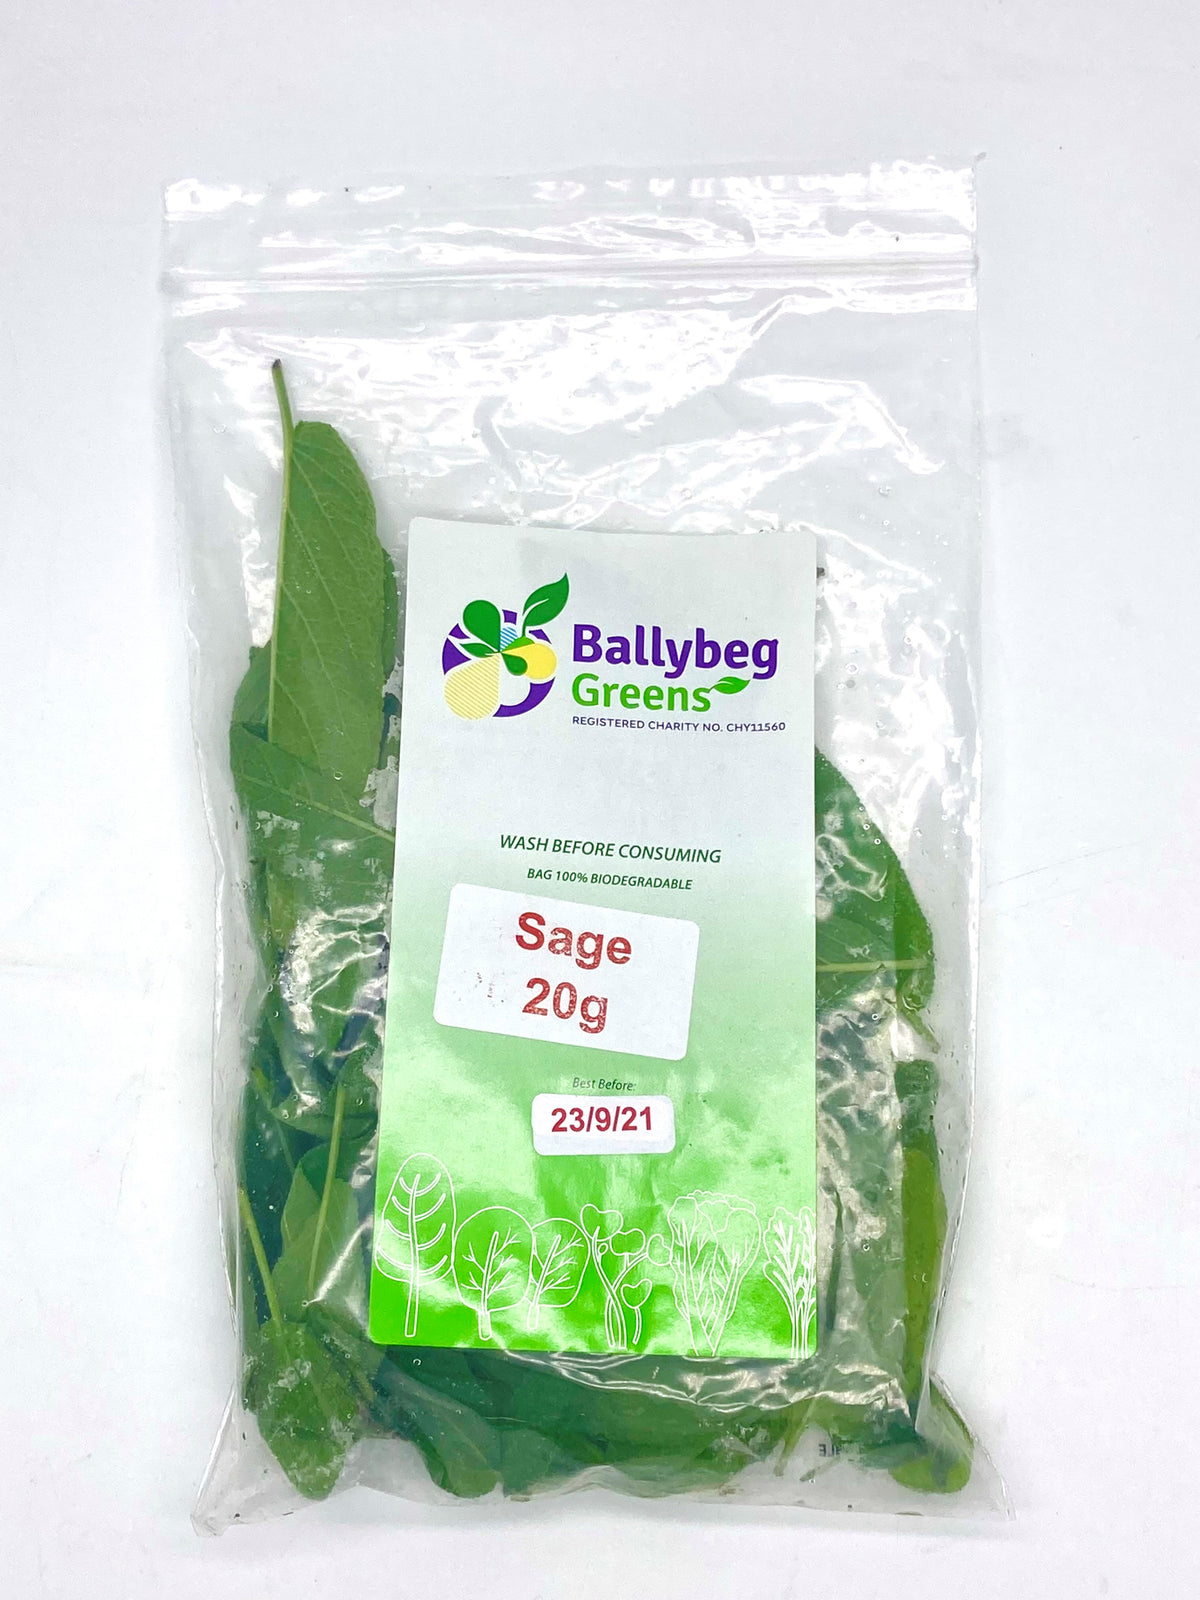 Ballybeg Greens Sage 20g